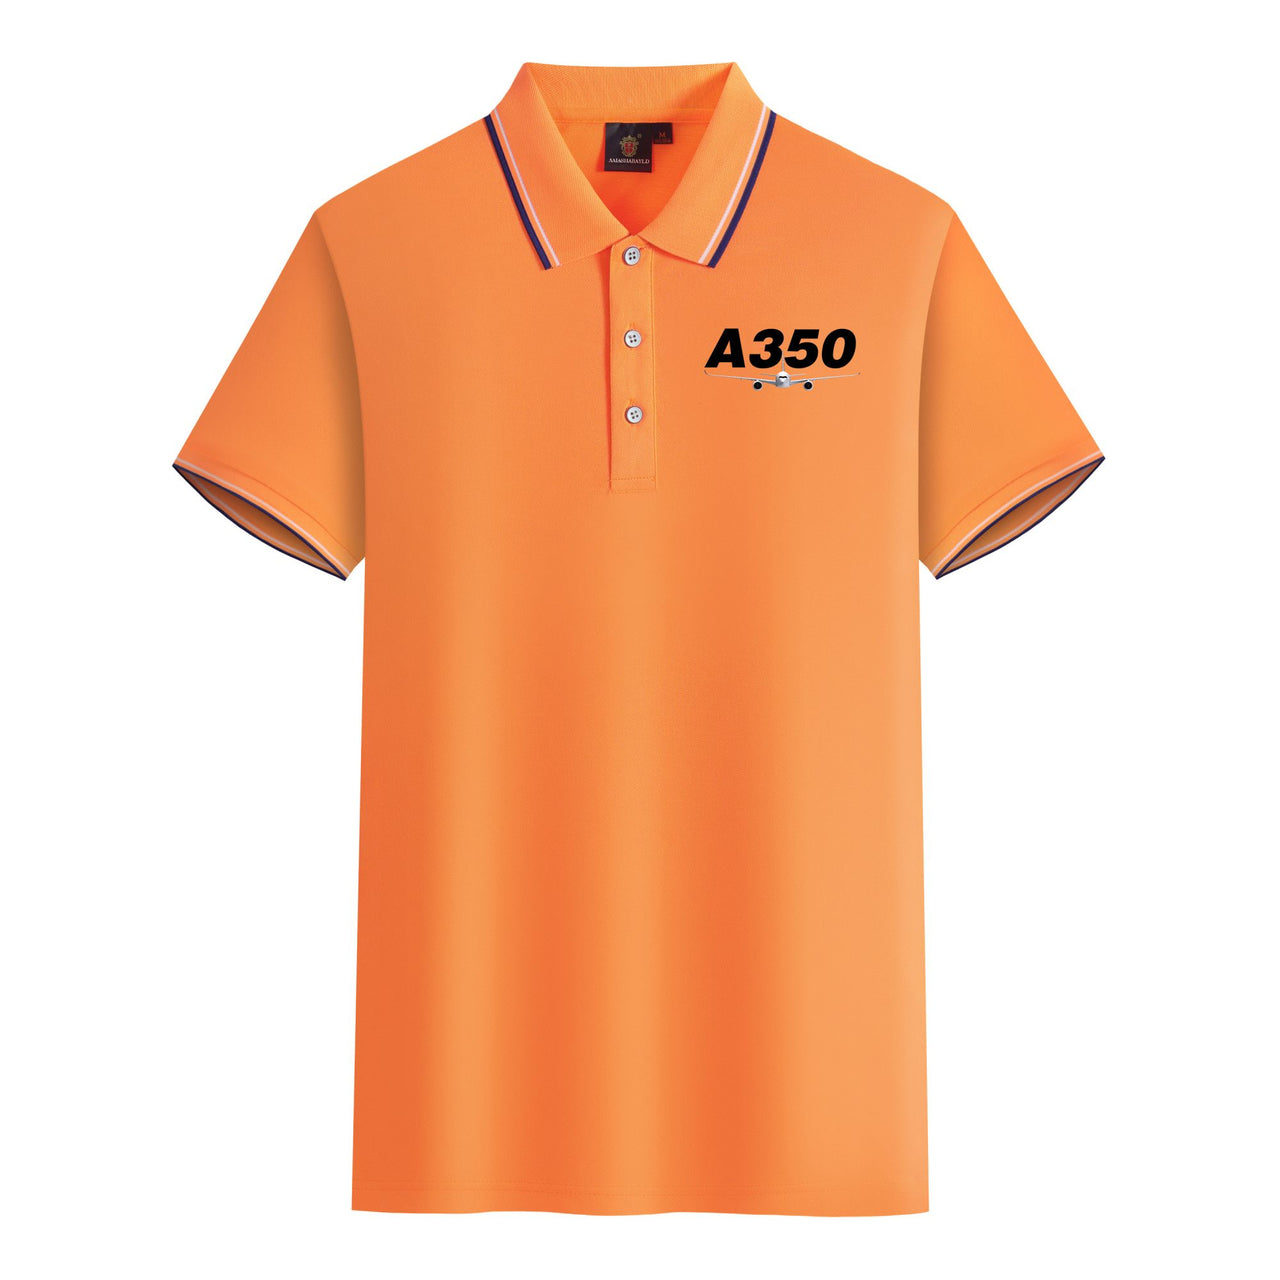 Super Airbus A350 Designed Stylish Polo T-Shirts